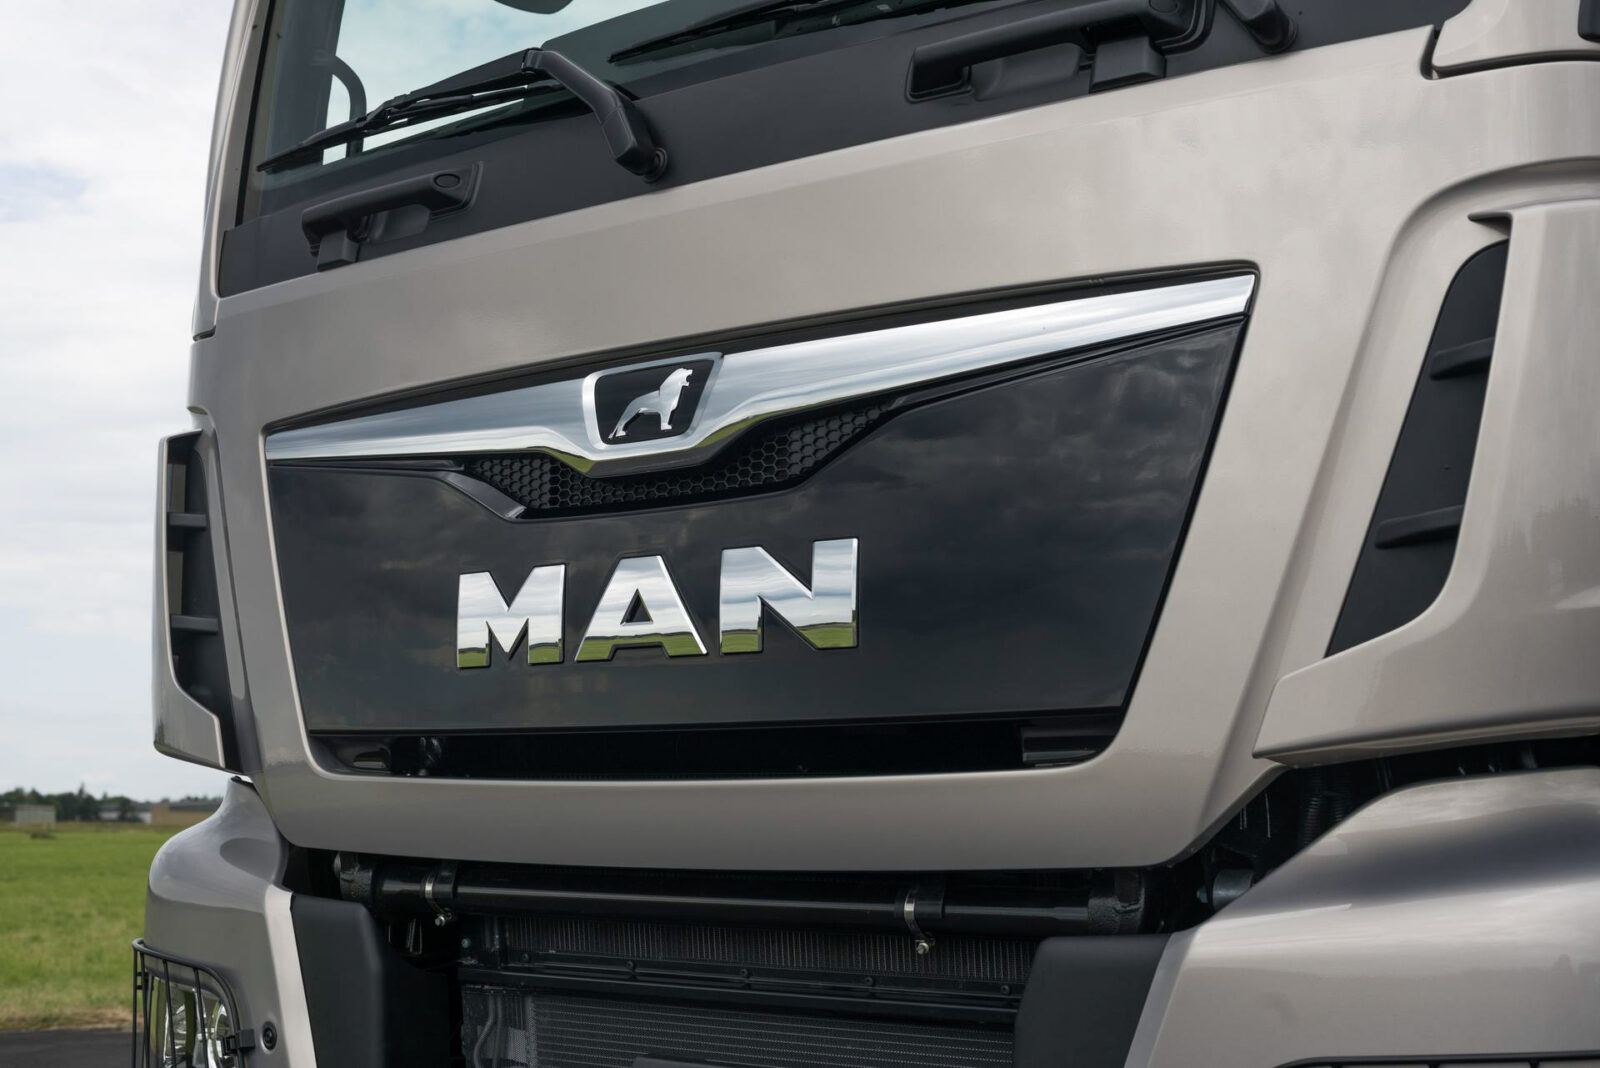 MAN logo on truck front